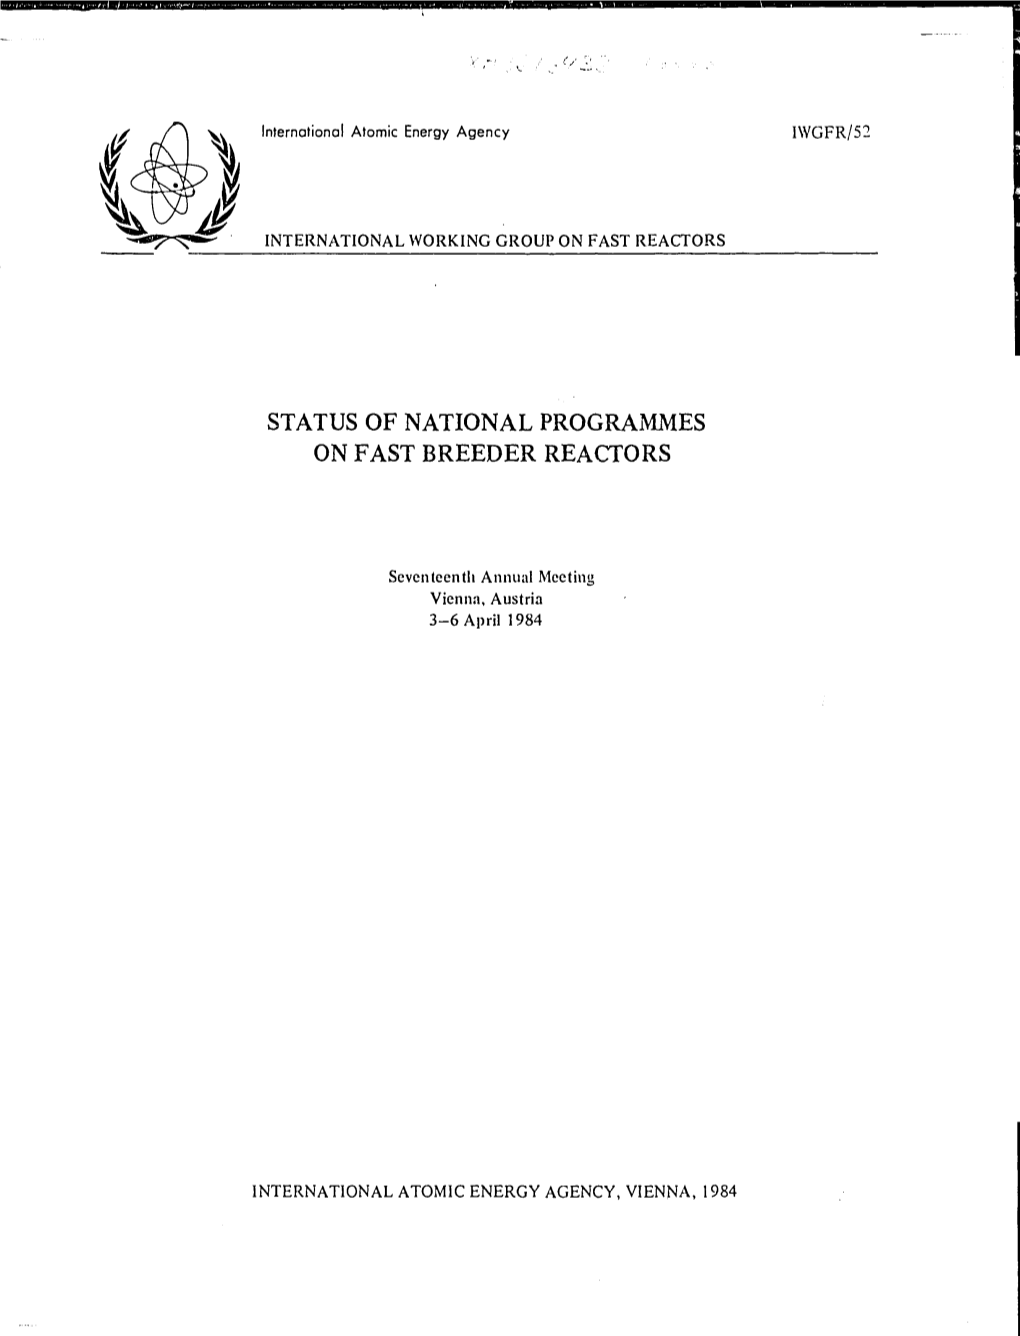 Status of National Programmes on Fast Breeder Reactors